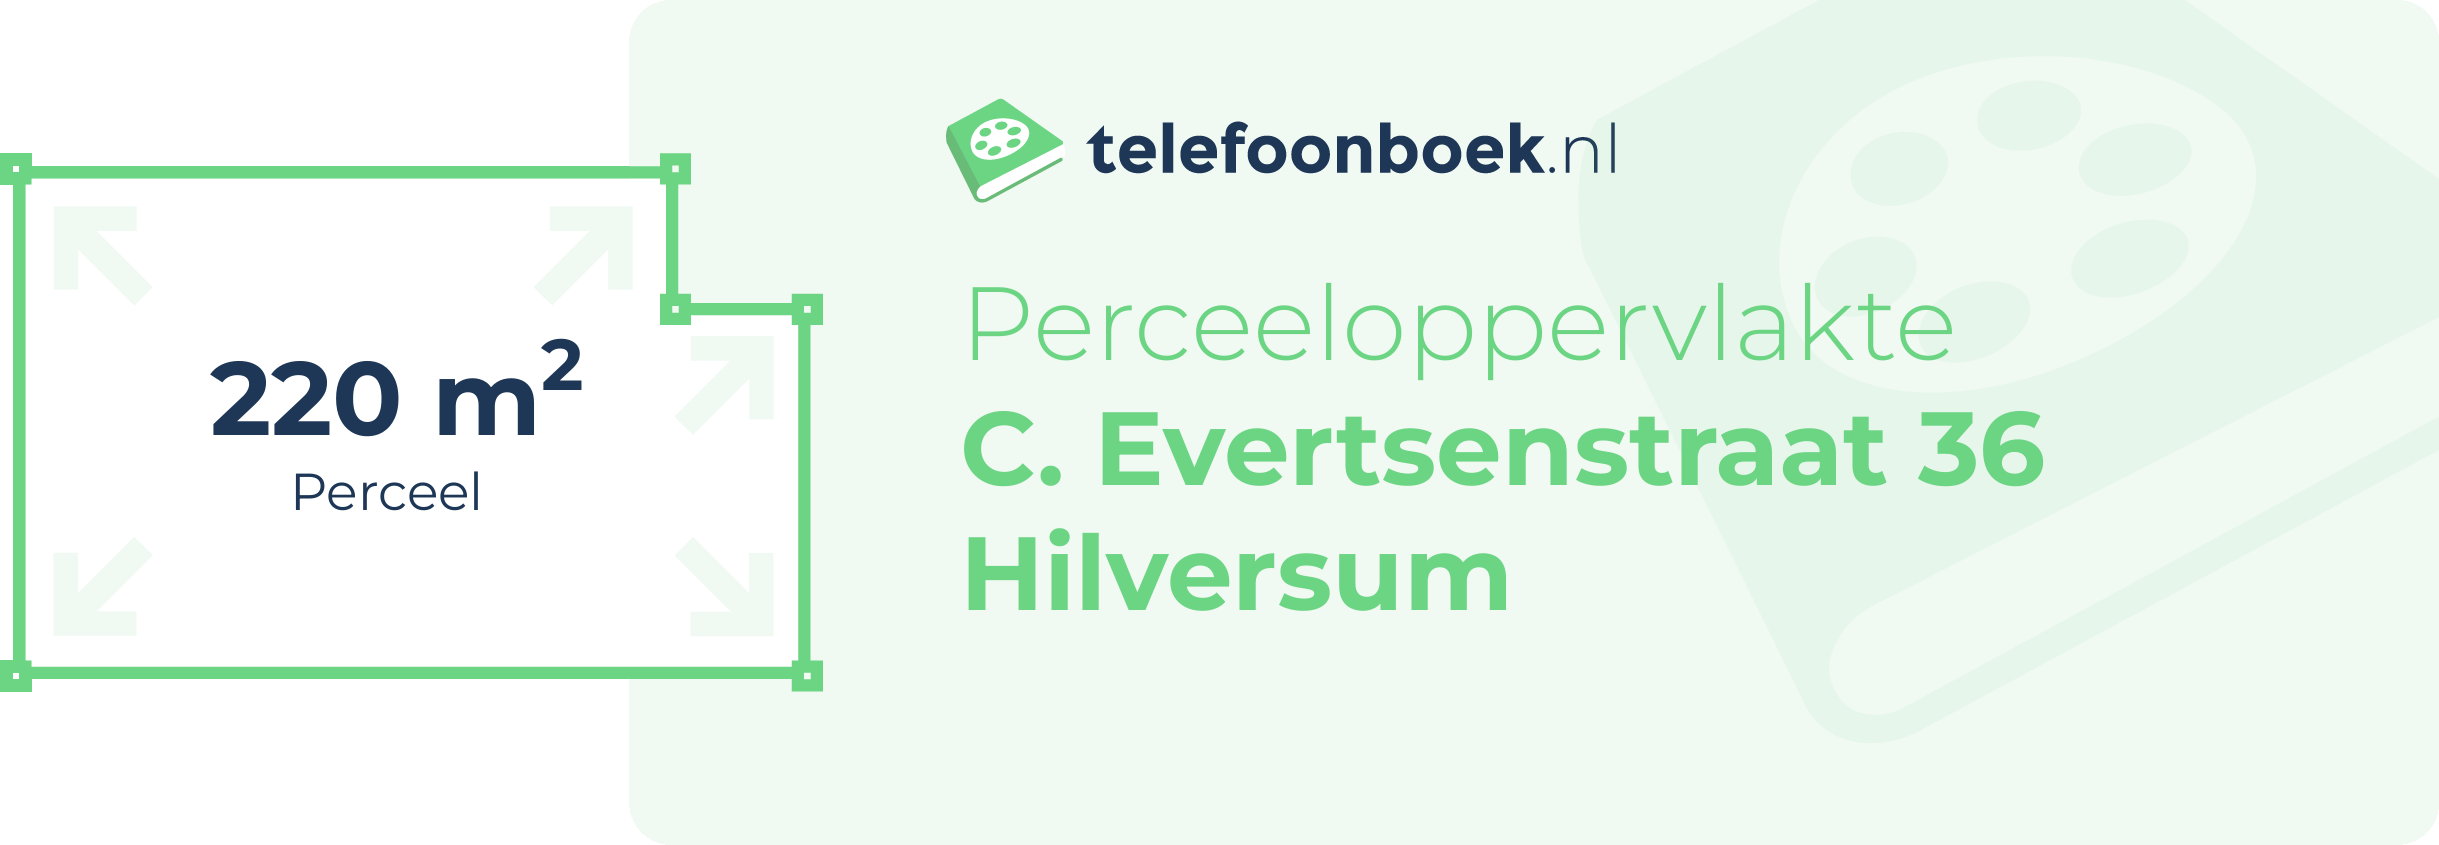 Perceeloppervlakte C. Evertsenstraat 36 Hilversum